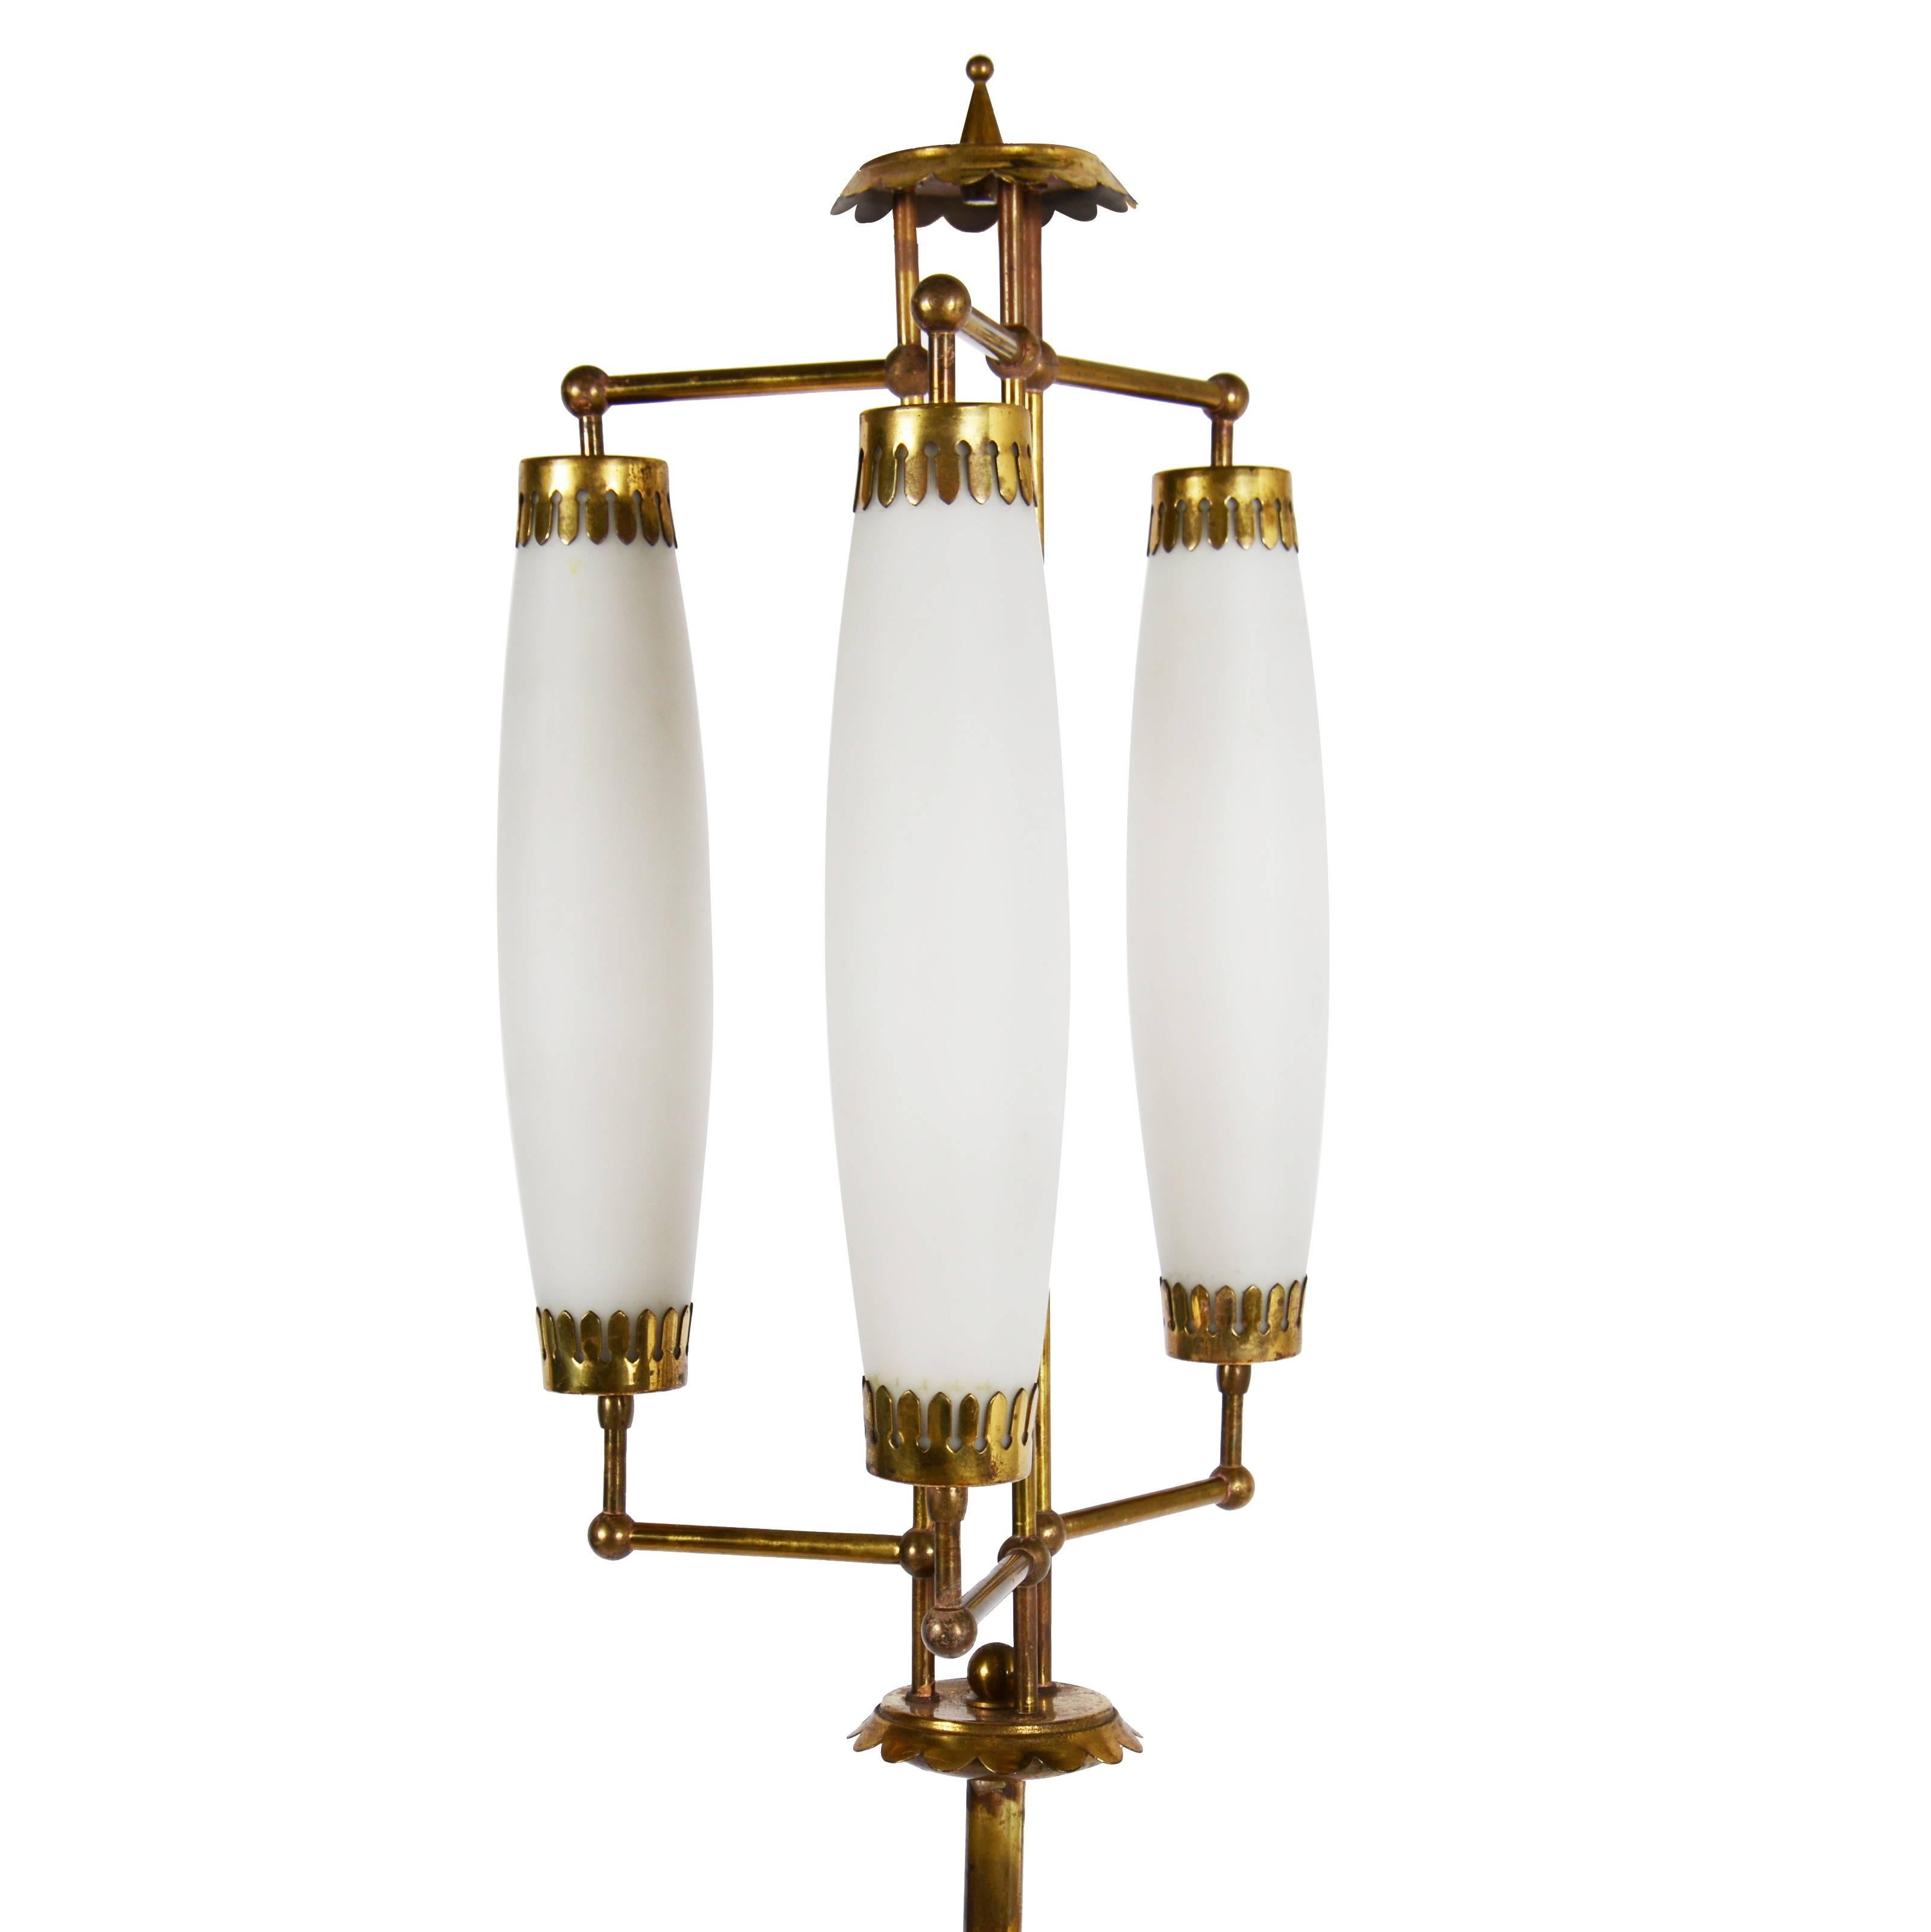 Brass floor lamp with three ovoid lantern diffusers on tripod base.
 